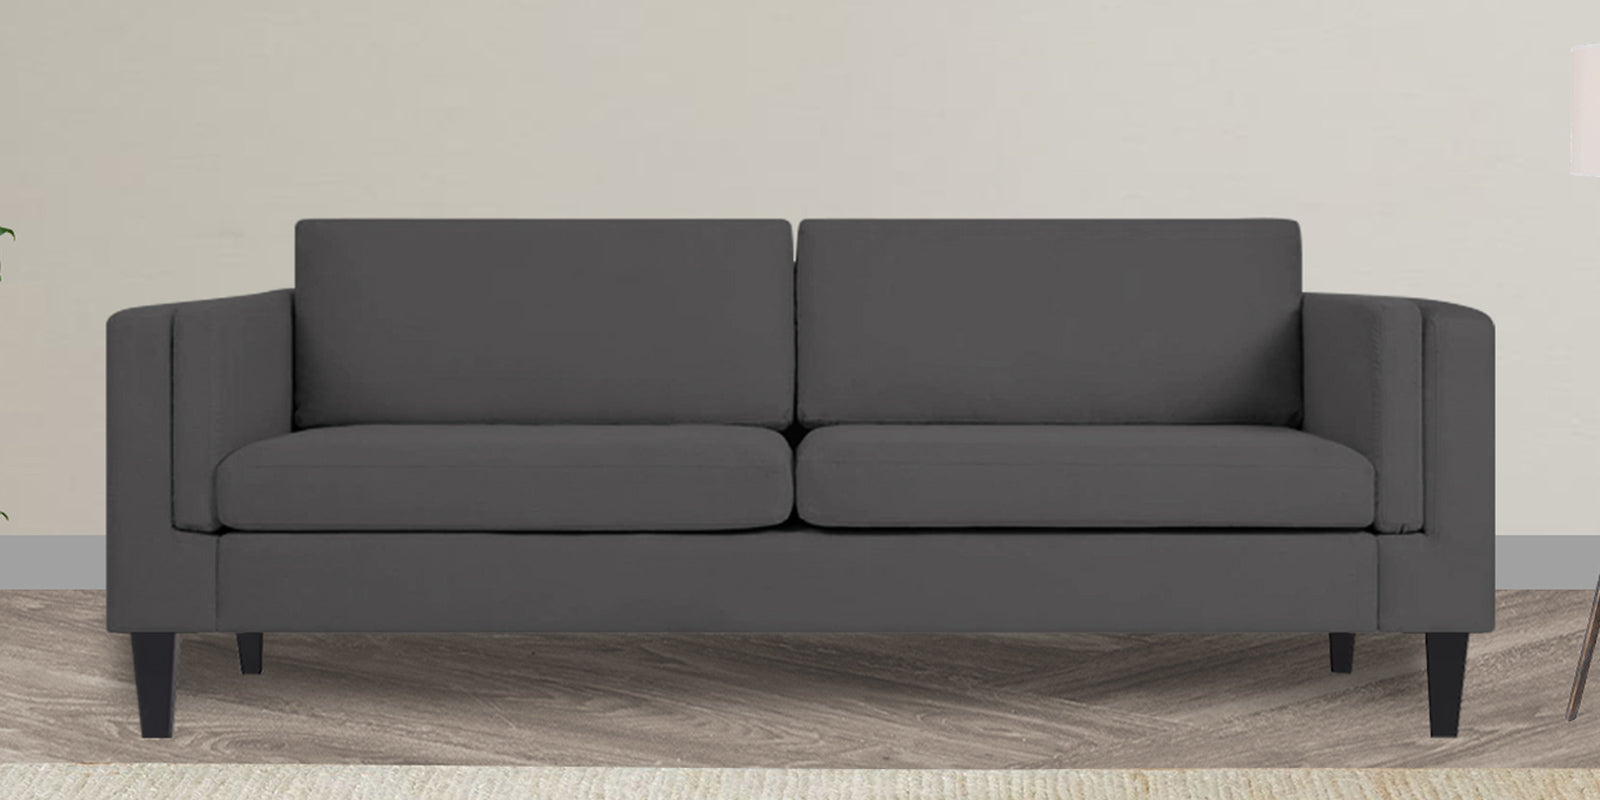 Jasper Velvet 3 Seater Sofa in Davy grey Colour